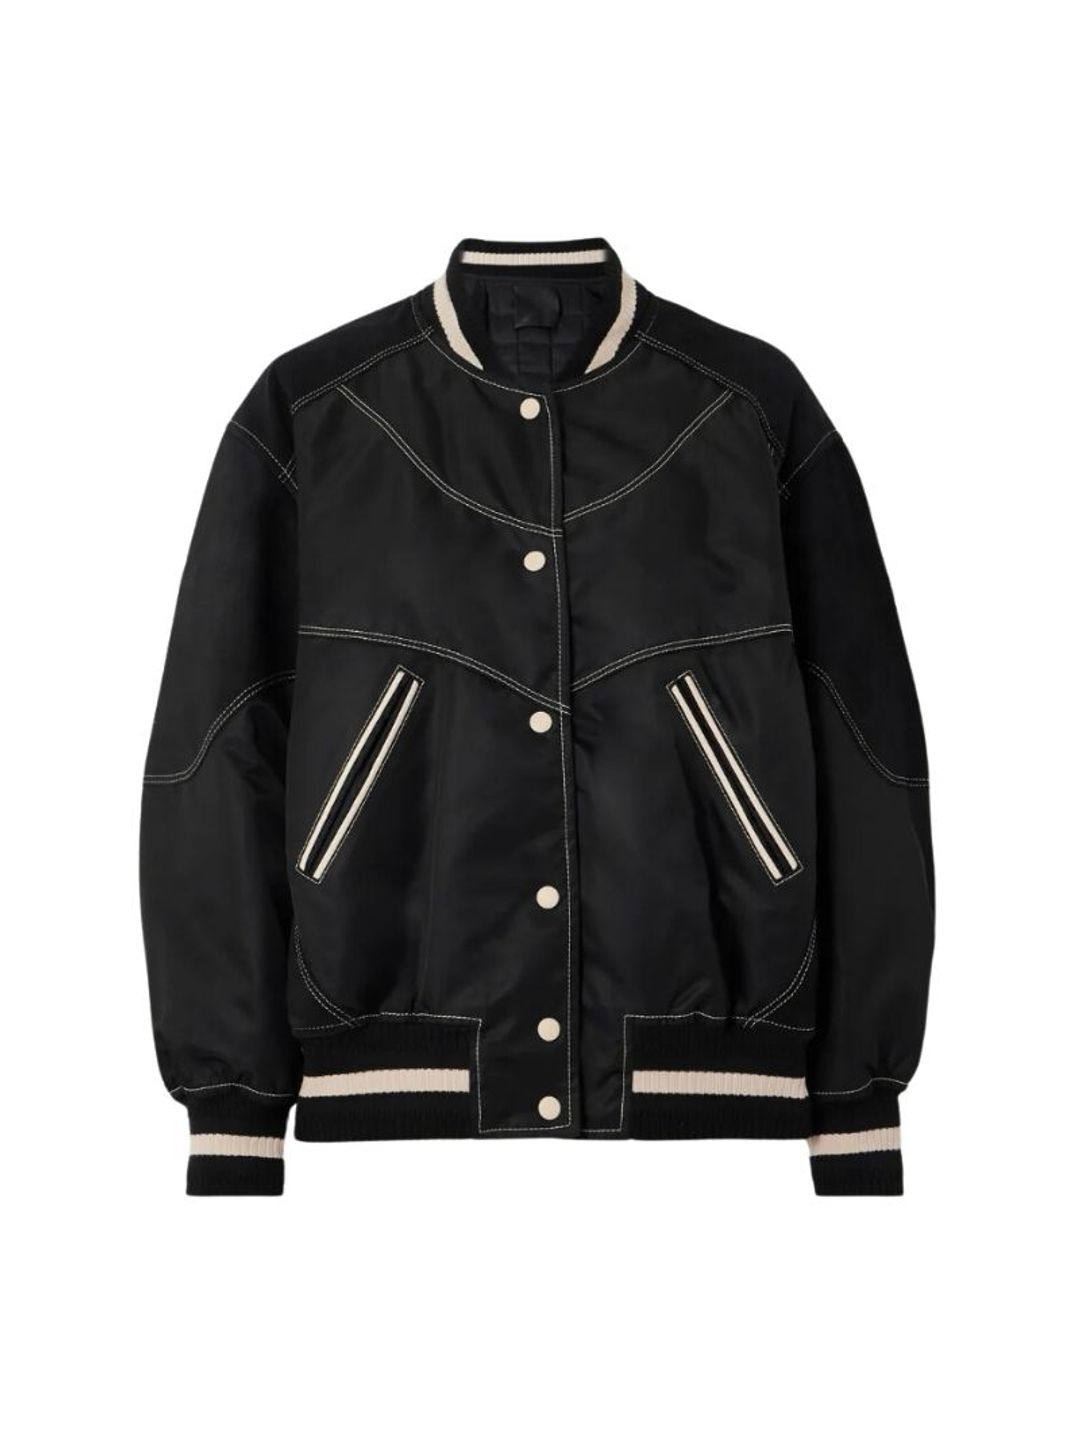 Givenchy black bomber jacket 